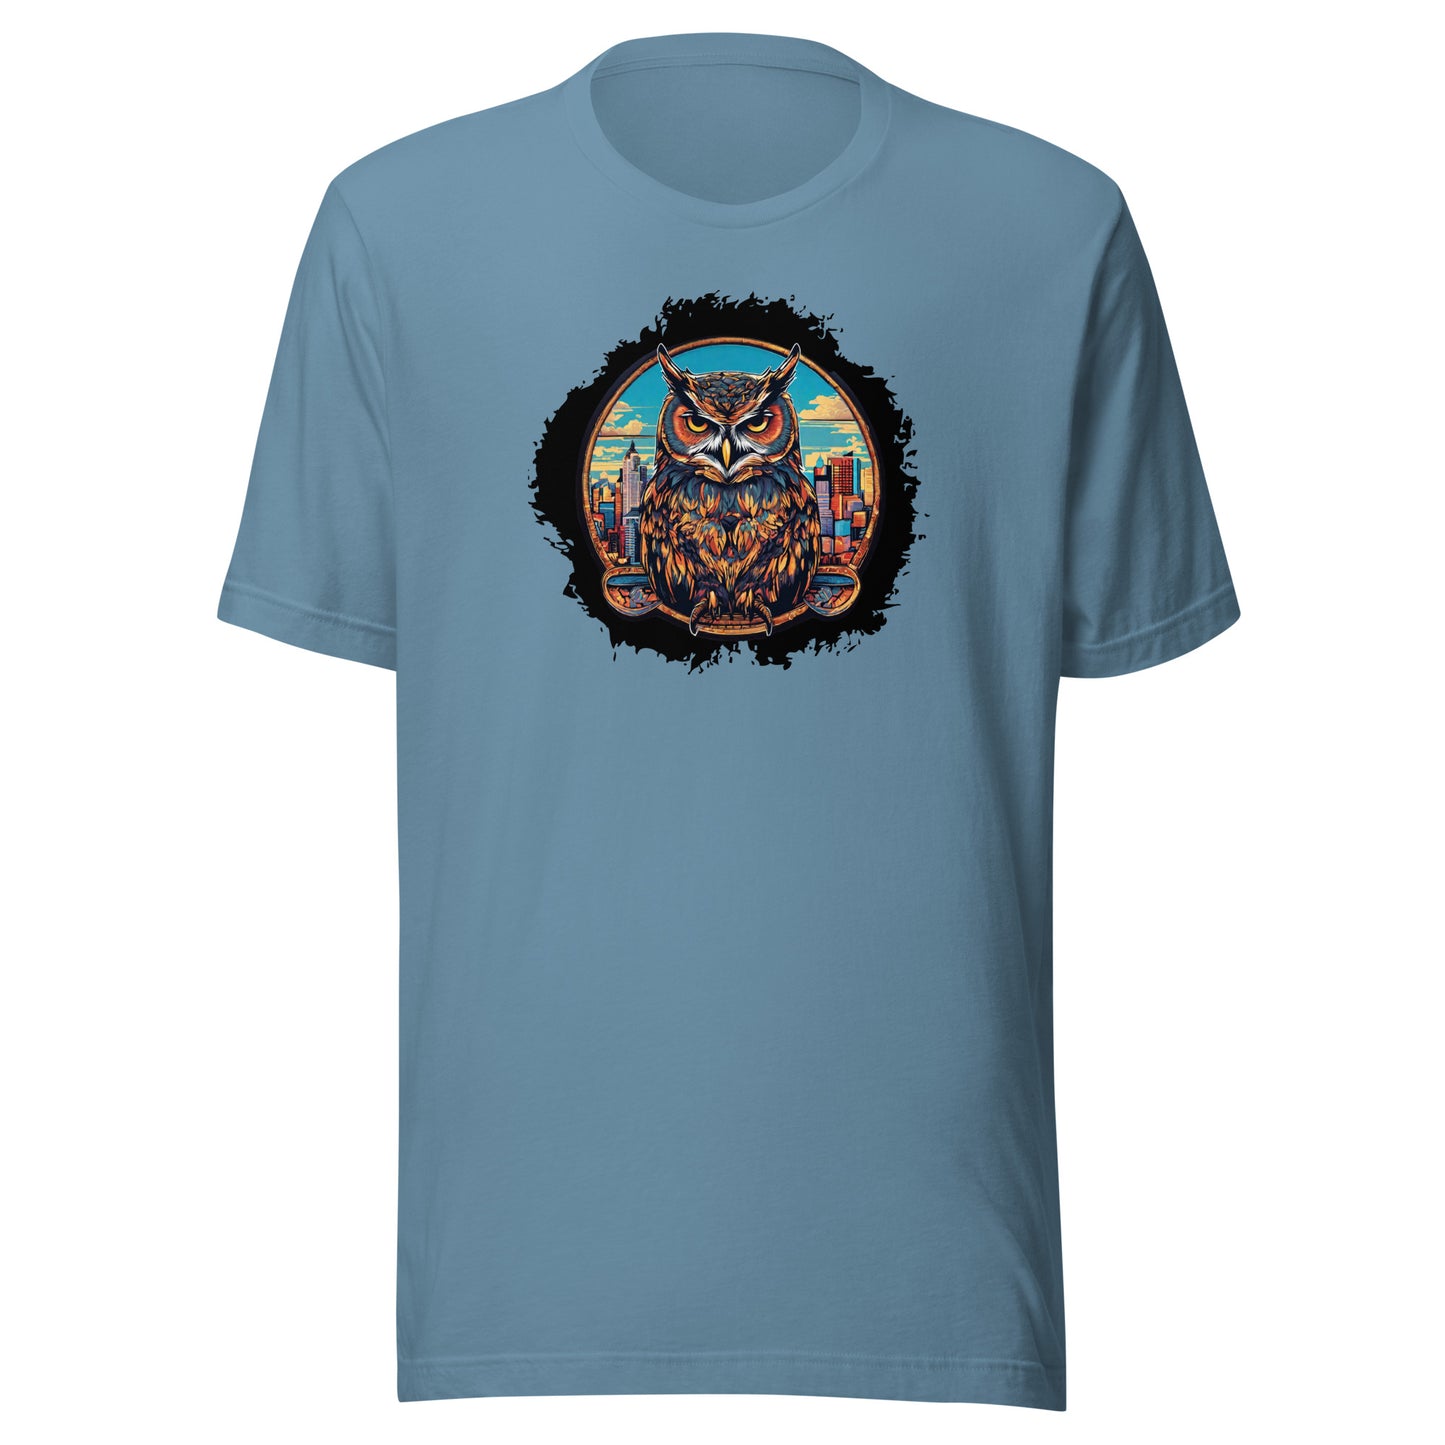 Owl in the City Emblem T-Shirt Steel Blue